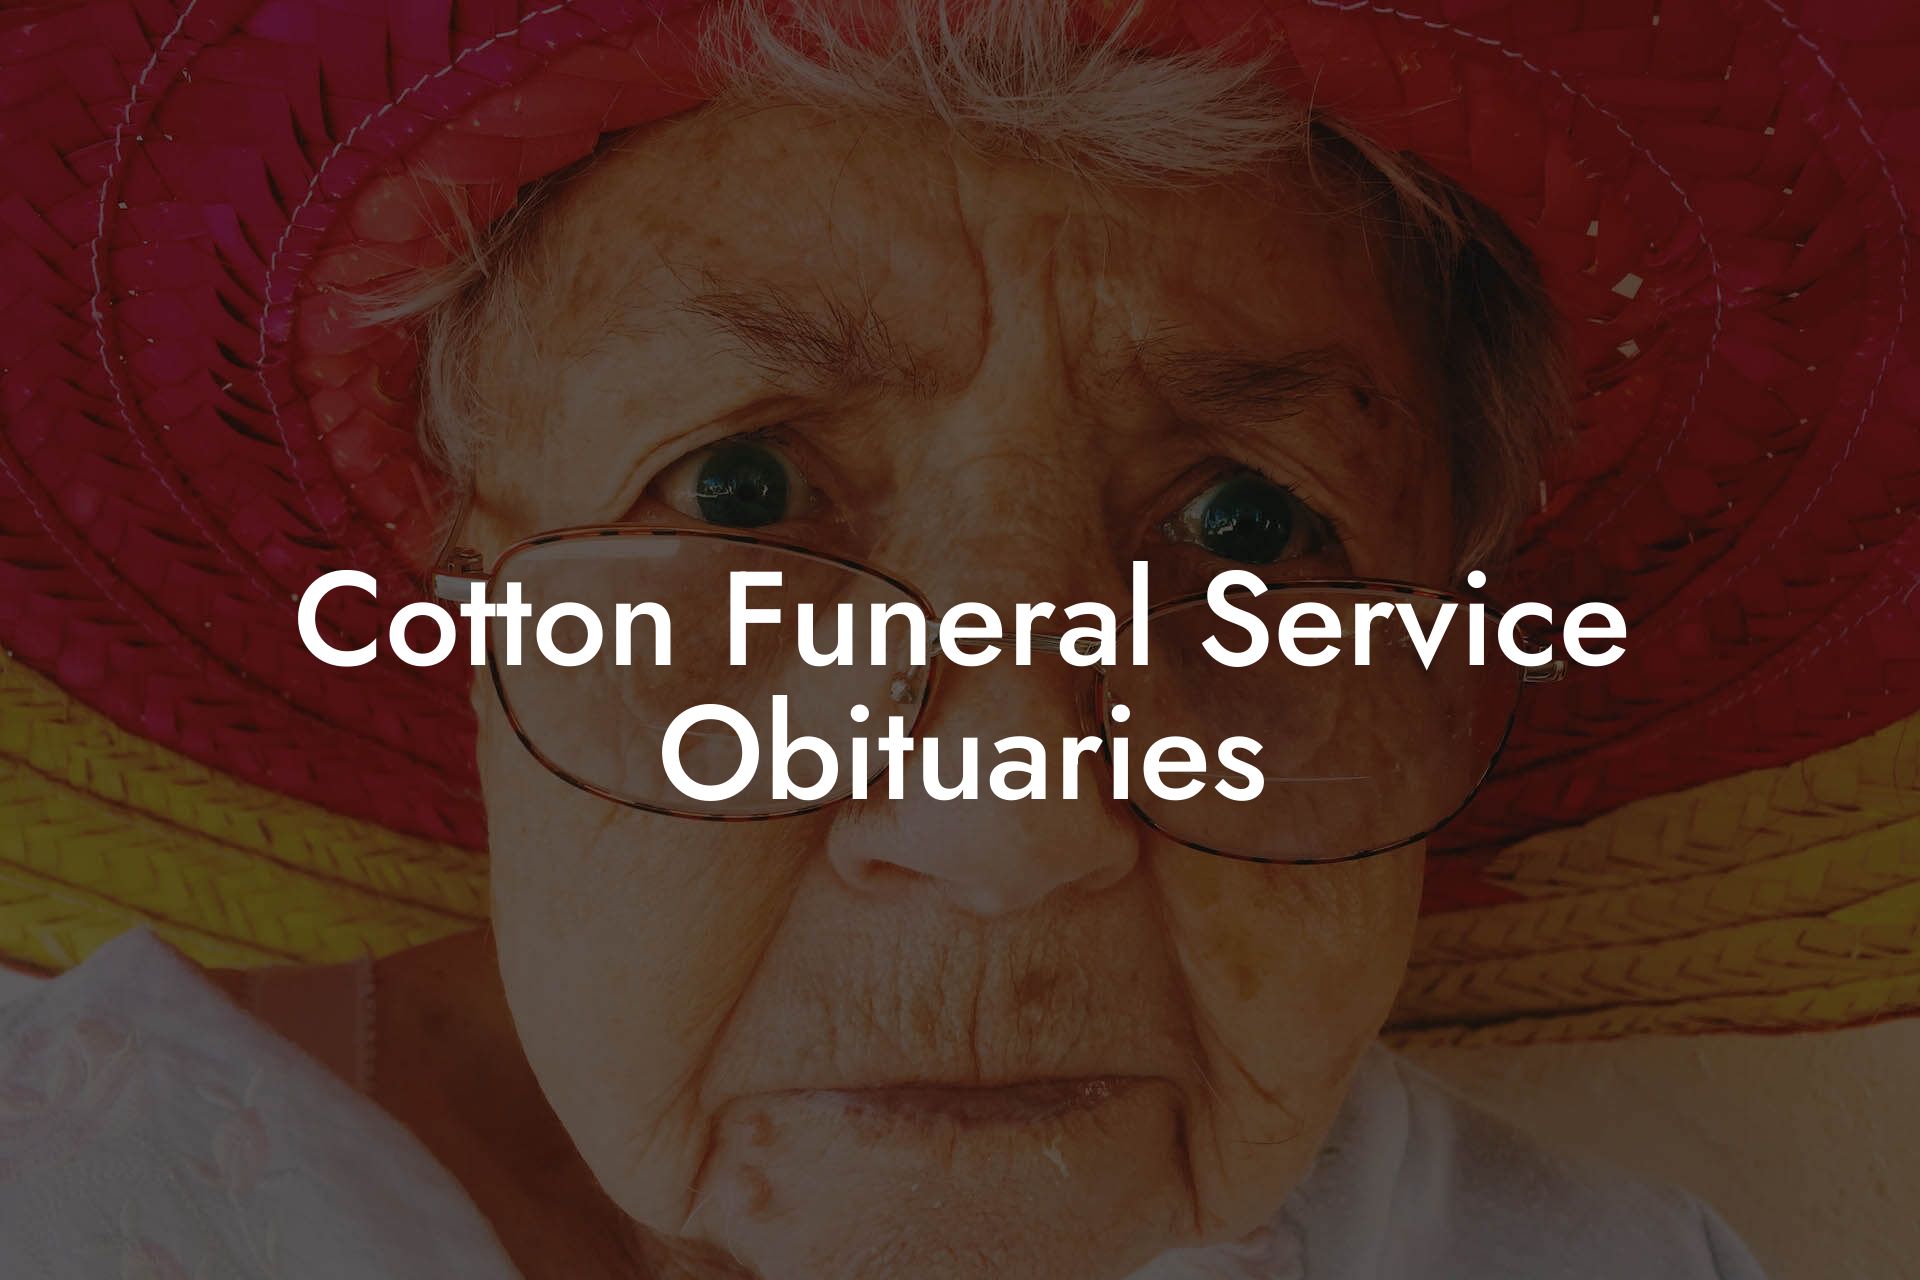 Cotton Funeral Service Obituaries